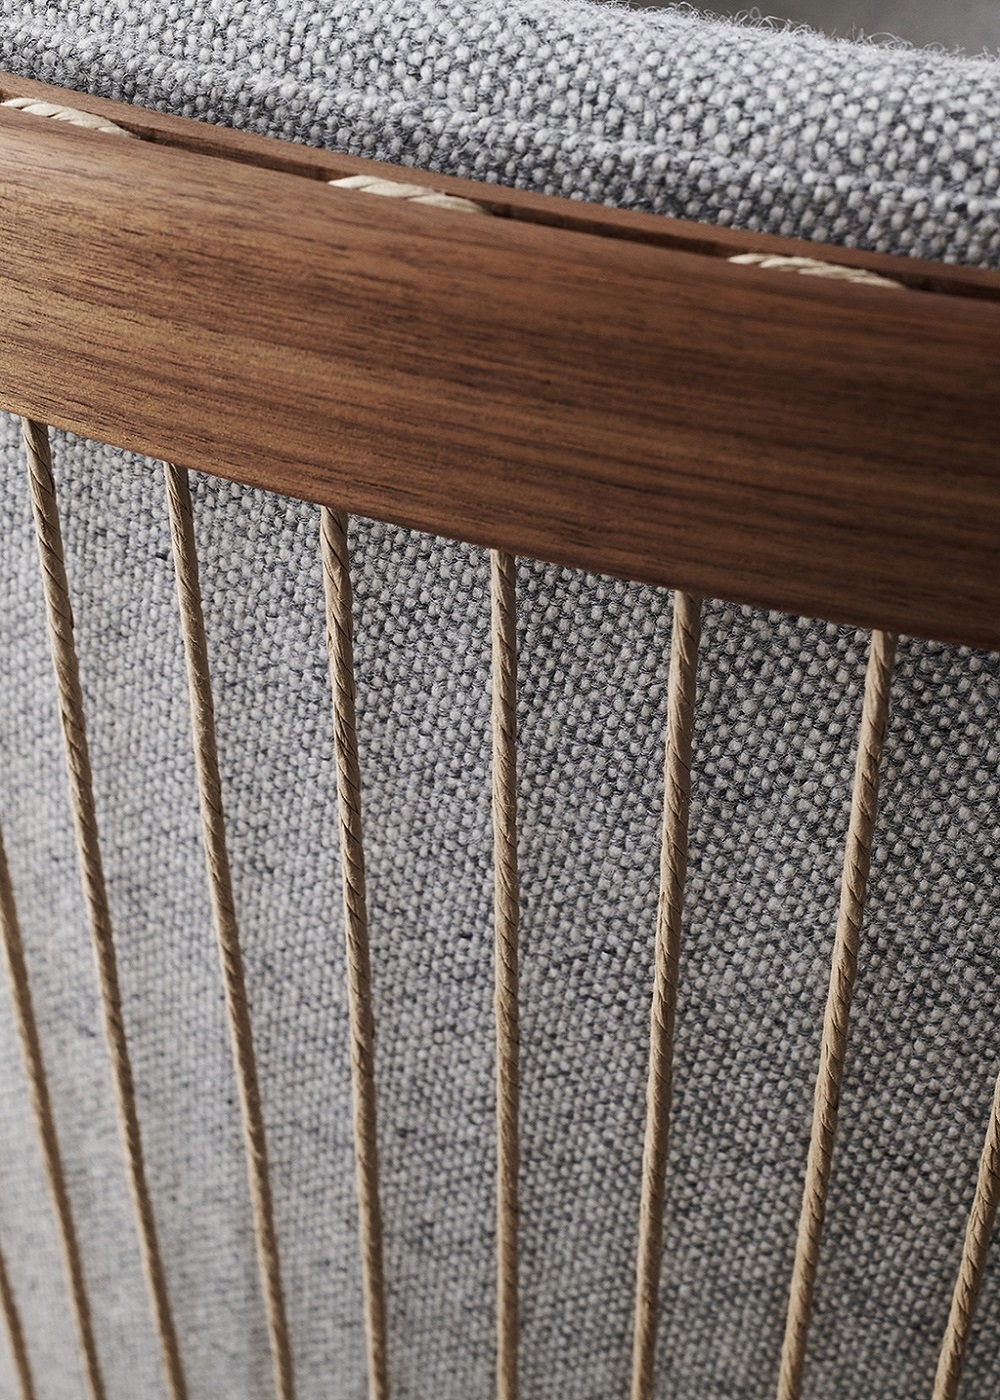 wood and cord detail of sideways sofa by Carl Hanson & son